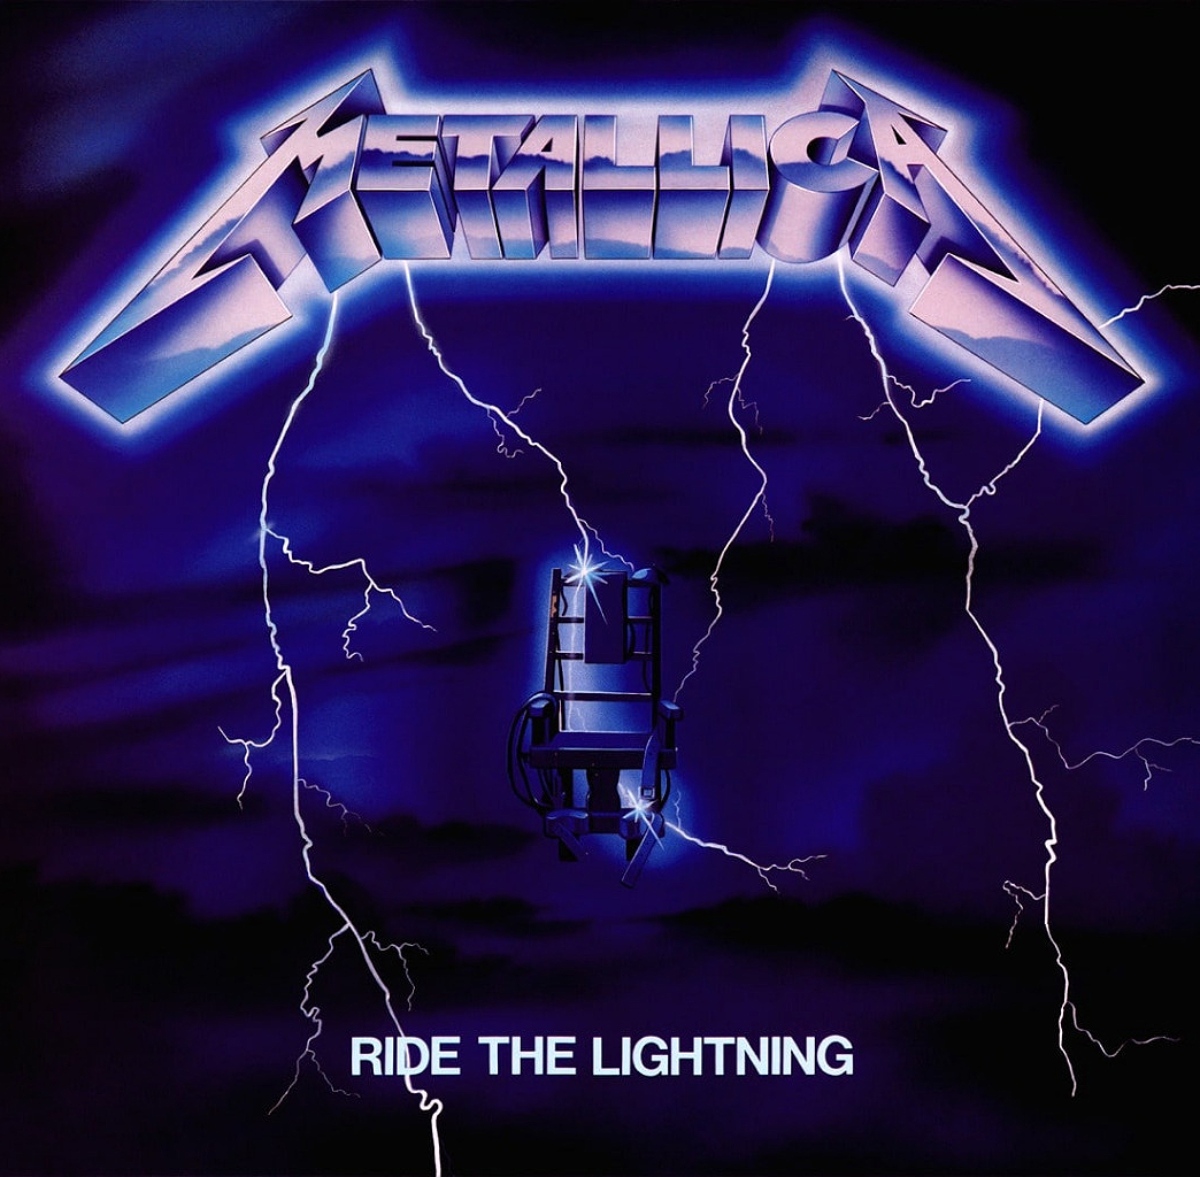 Capa do álbum 'Ride the Lightning' do Metallica